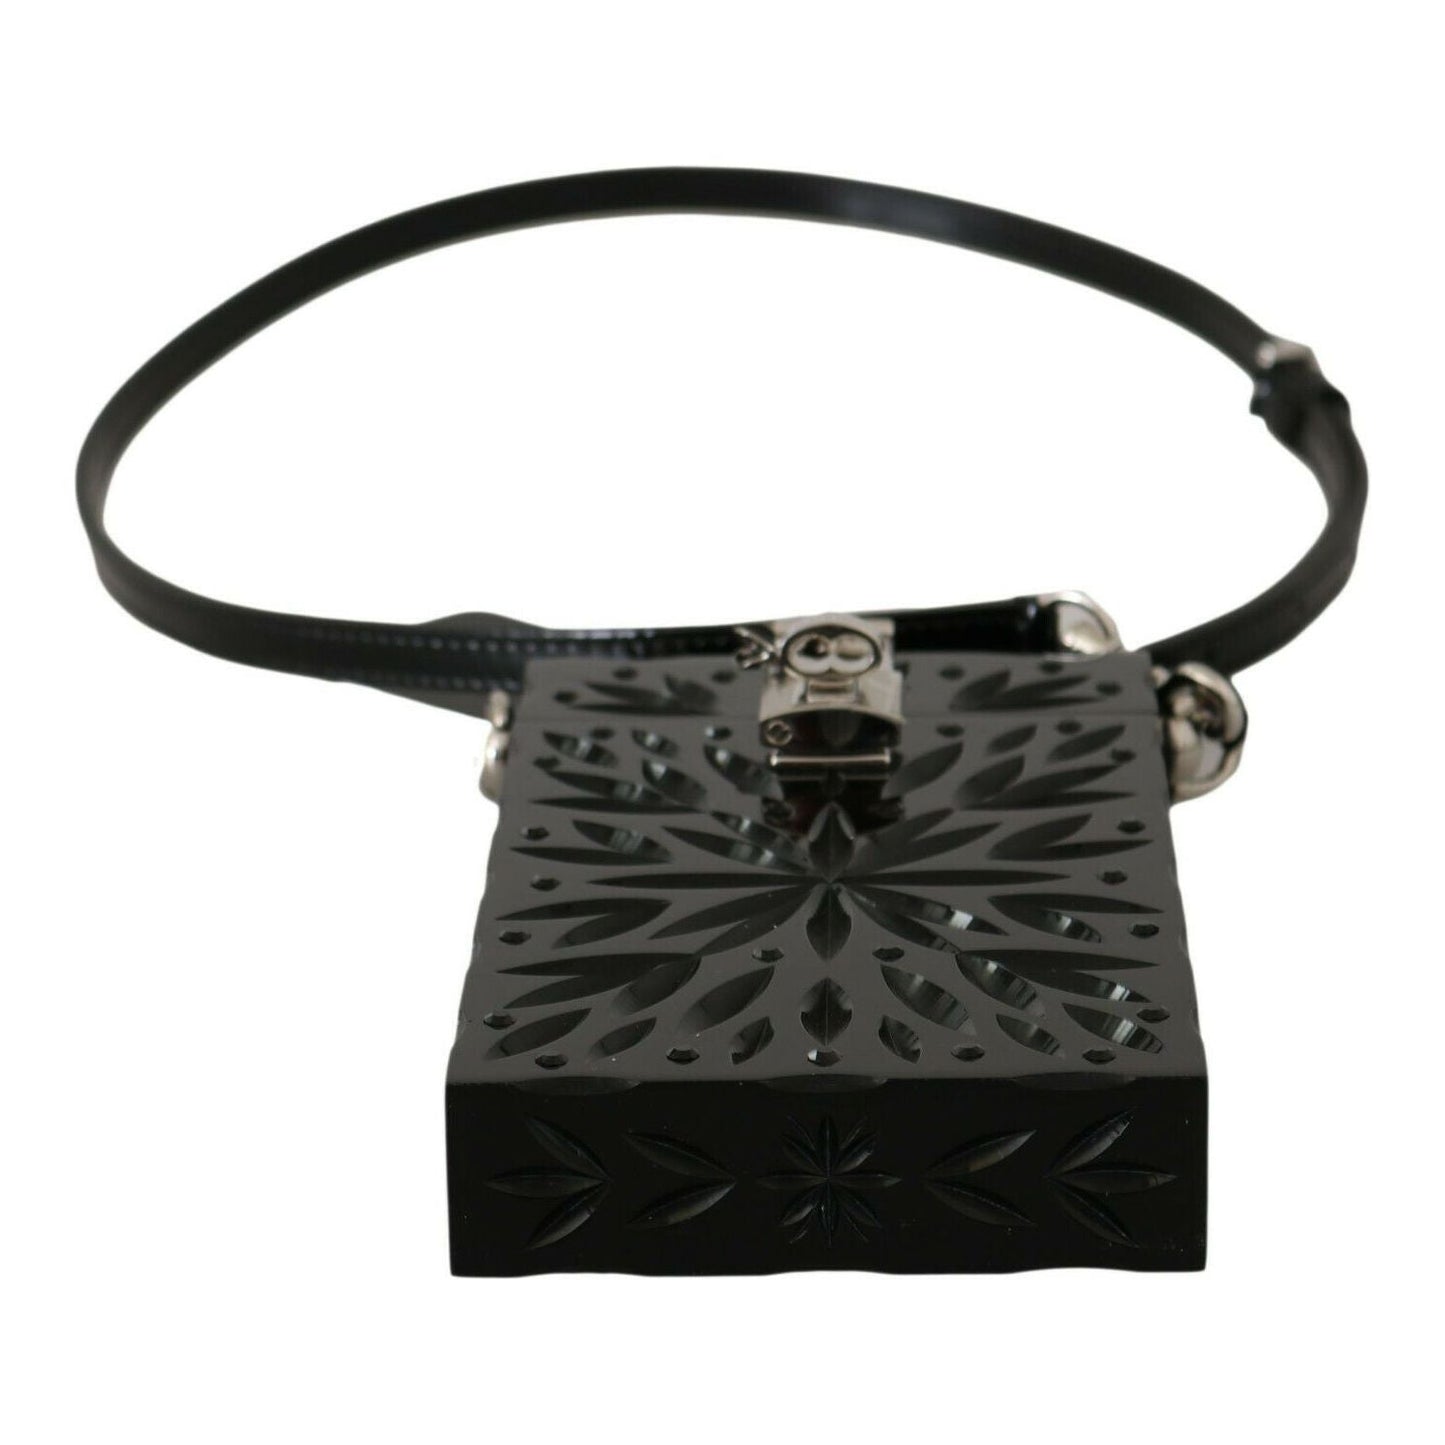 Dolce & Gabbana Exquisite Crystal-Plexi Cigarette Case Holder black-crystal-plexiglass-cross-cigarette-case-holder s-l1600-33-339b755a-69f.jpg